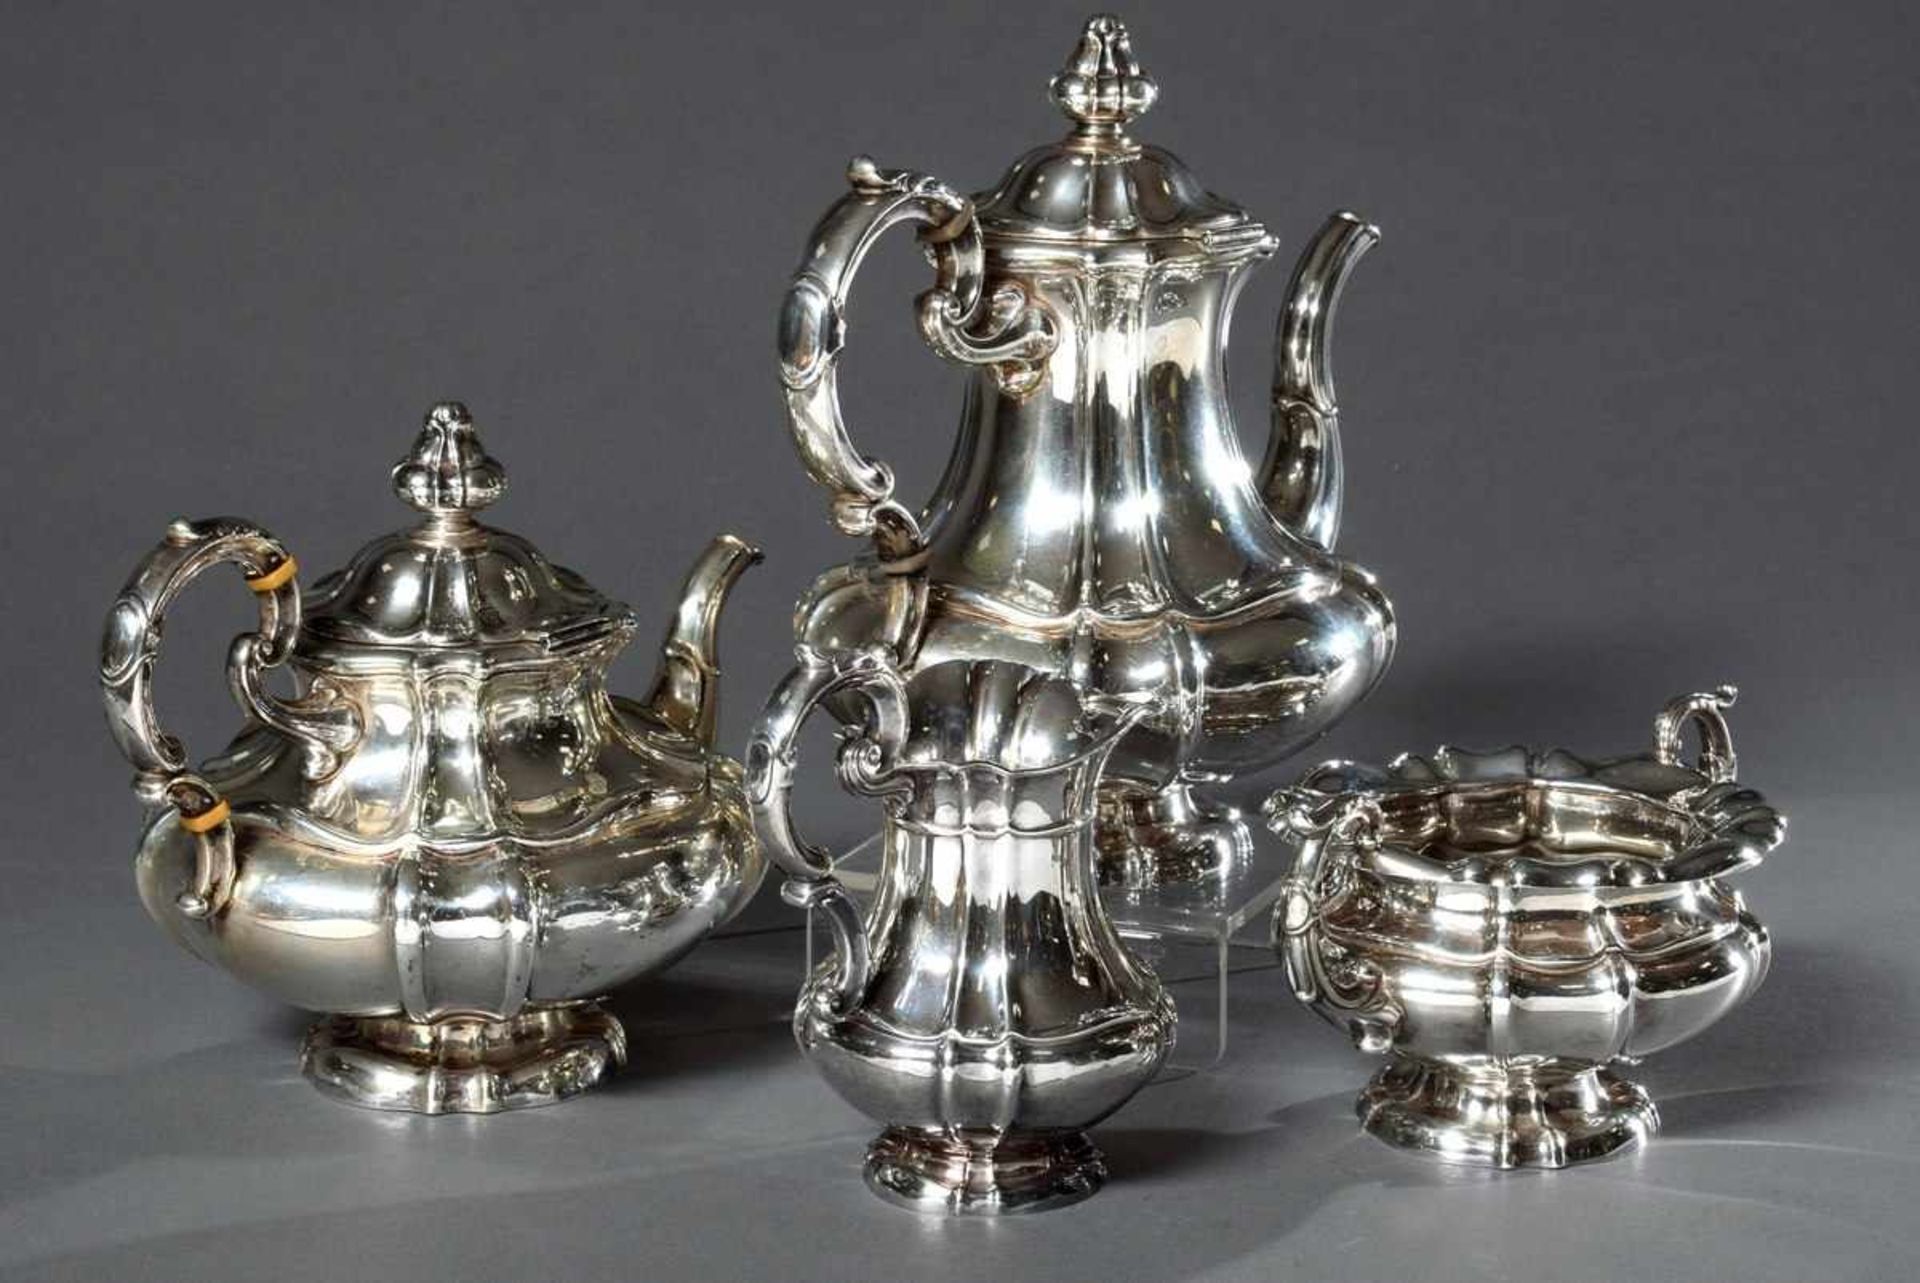 4 Teile Kaffee-Tee-Set in Spätbiedermeier Façon, Posen/Bruckmann & Söhne, Silber 835, 1864g, H. 11- - Image 2 of 7